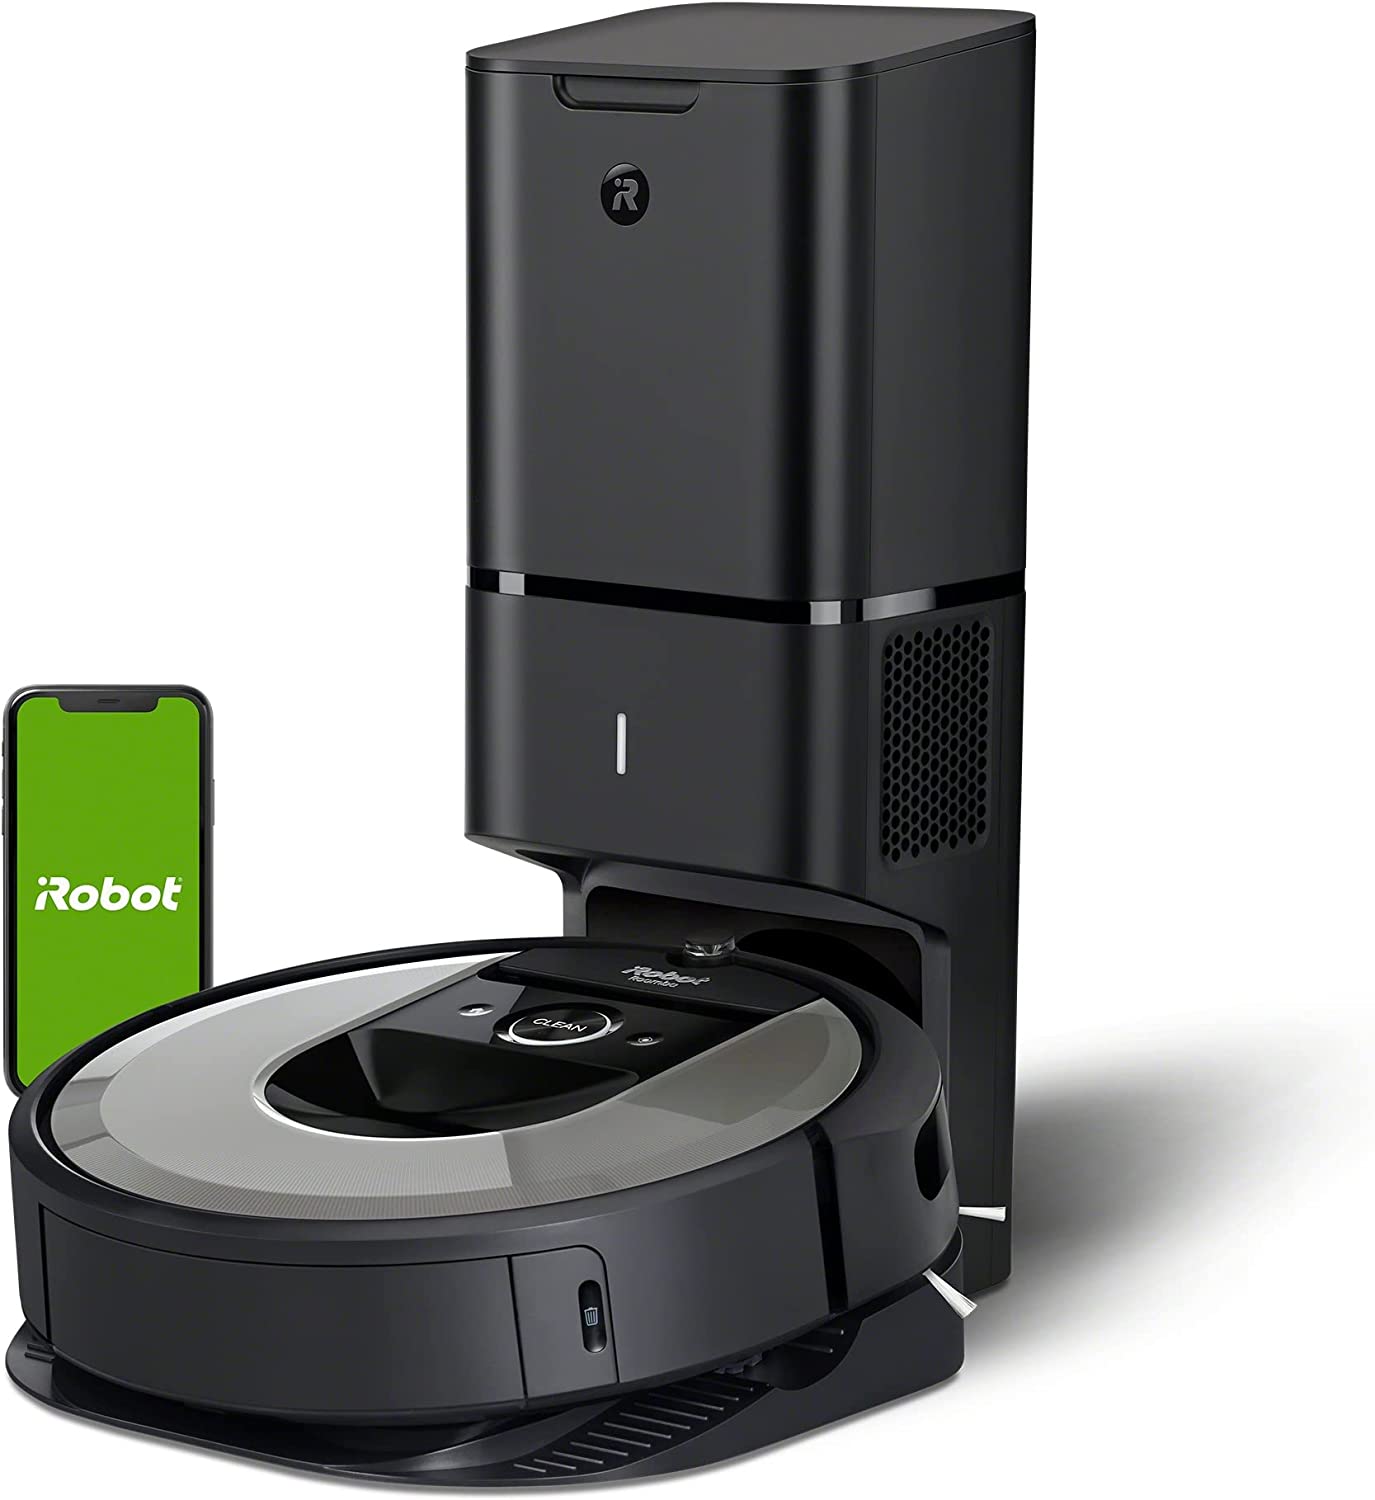 Roomba i7+ vs Roomba j7+ vs Roomba s9+